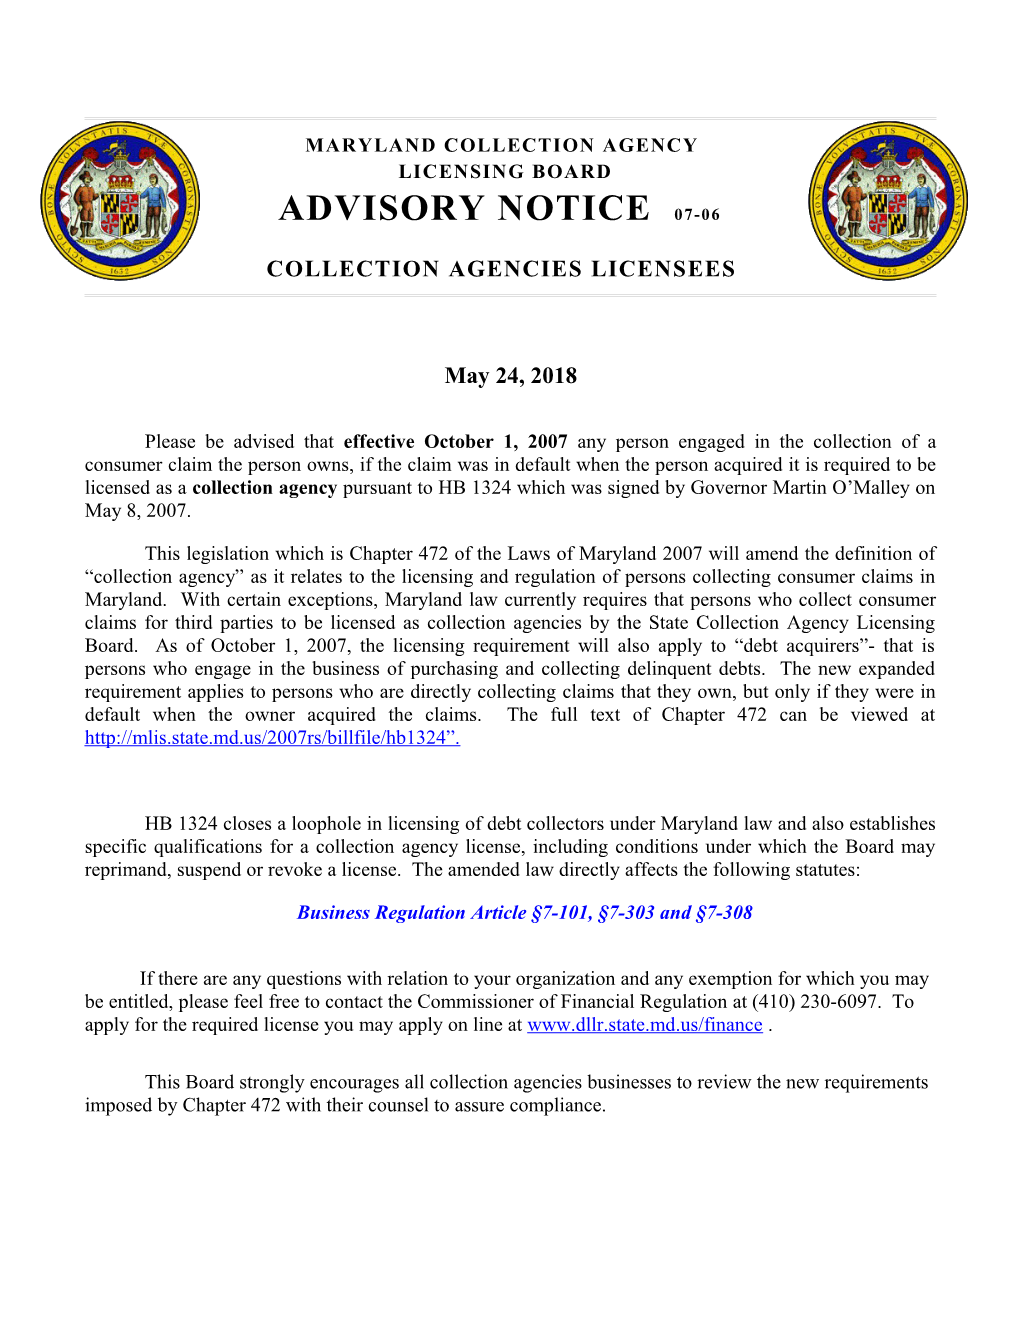 Advisory Notice 07-06